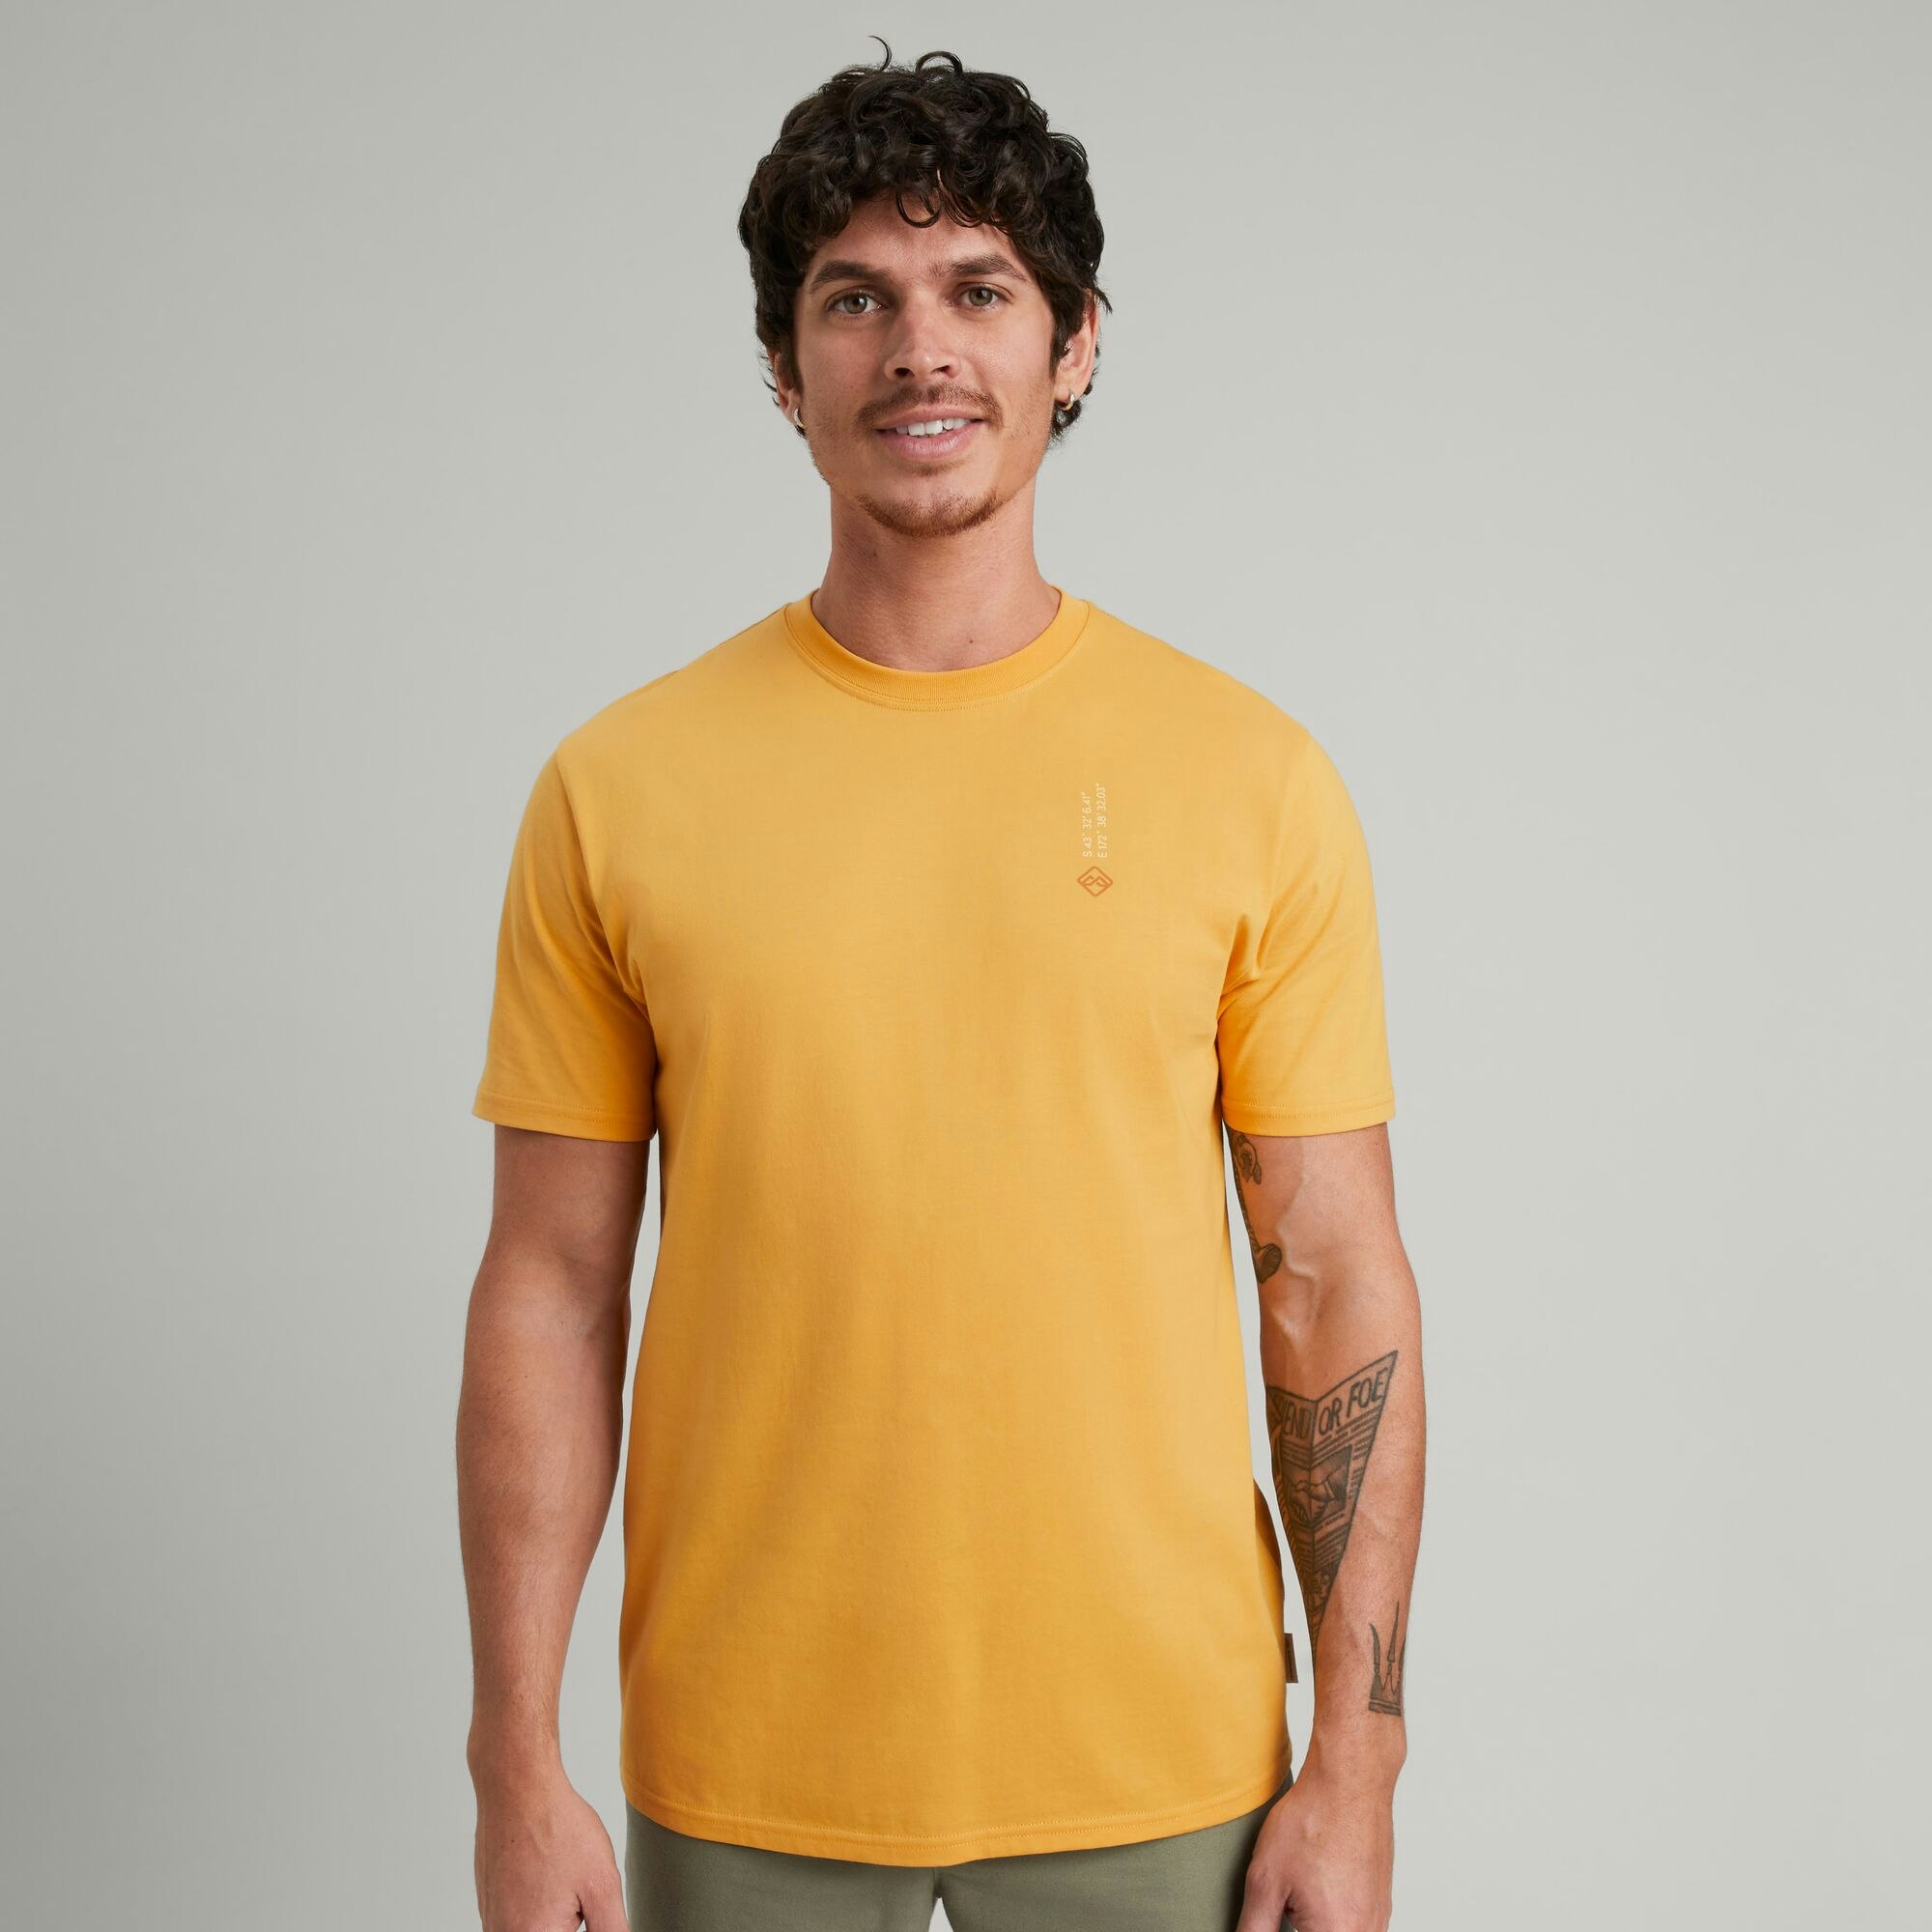 Men's Casual Shirts, T-Shirts & Hoodies, Tops for Men